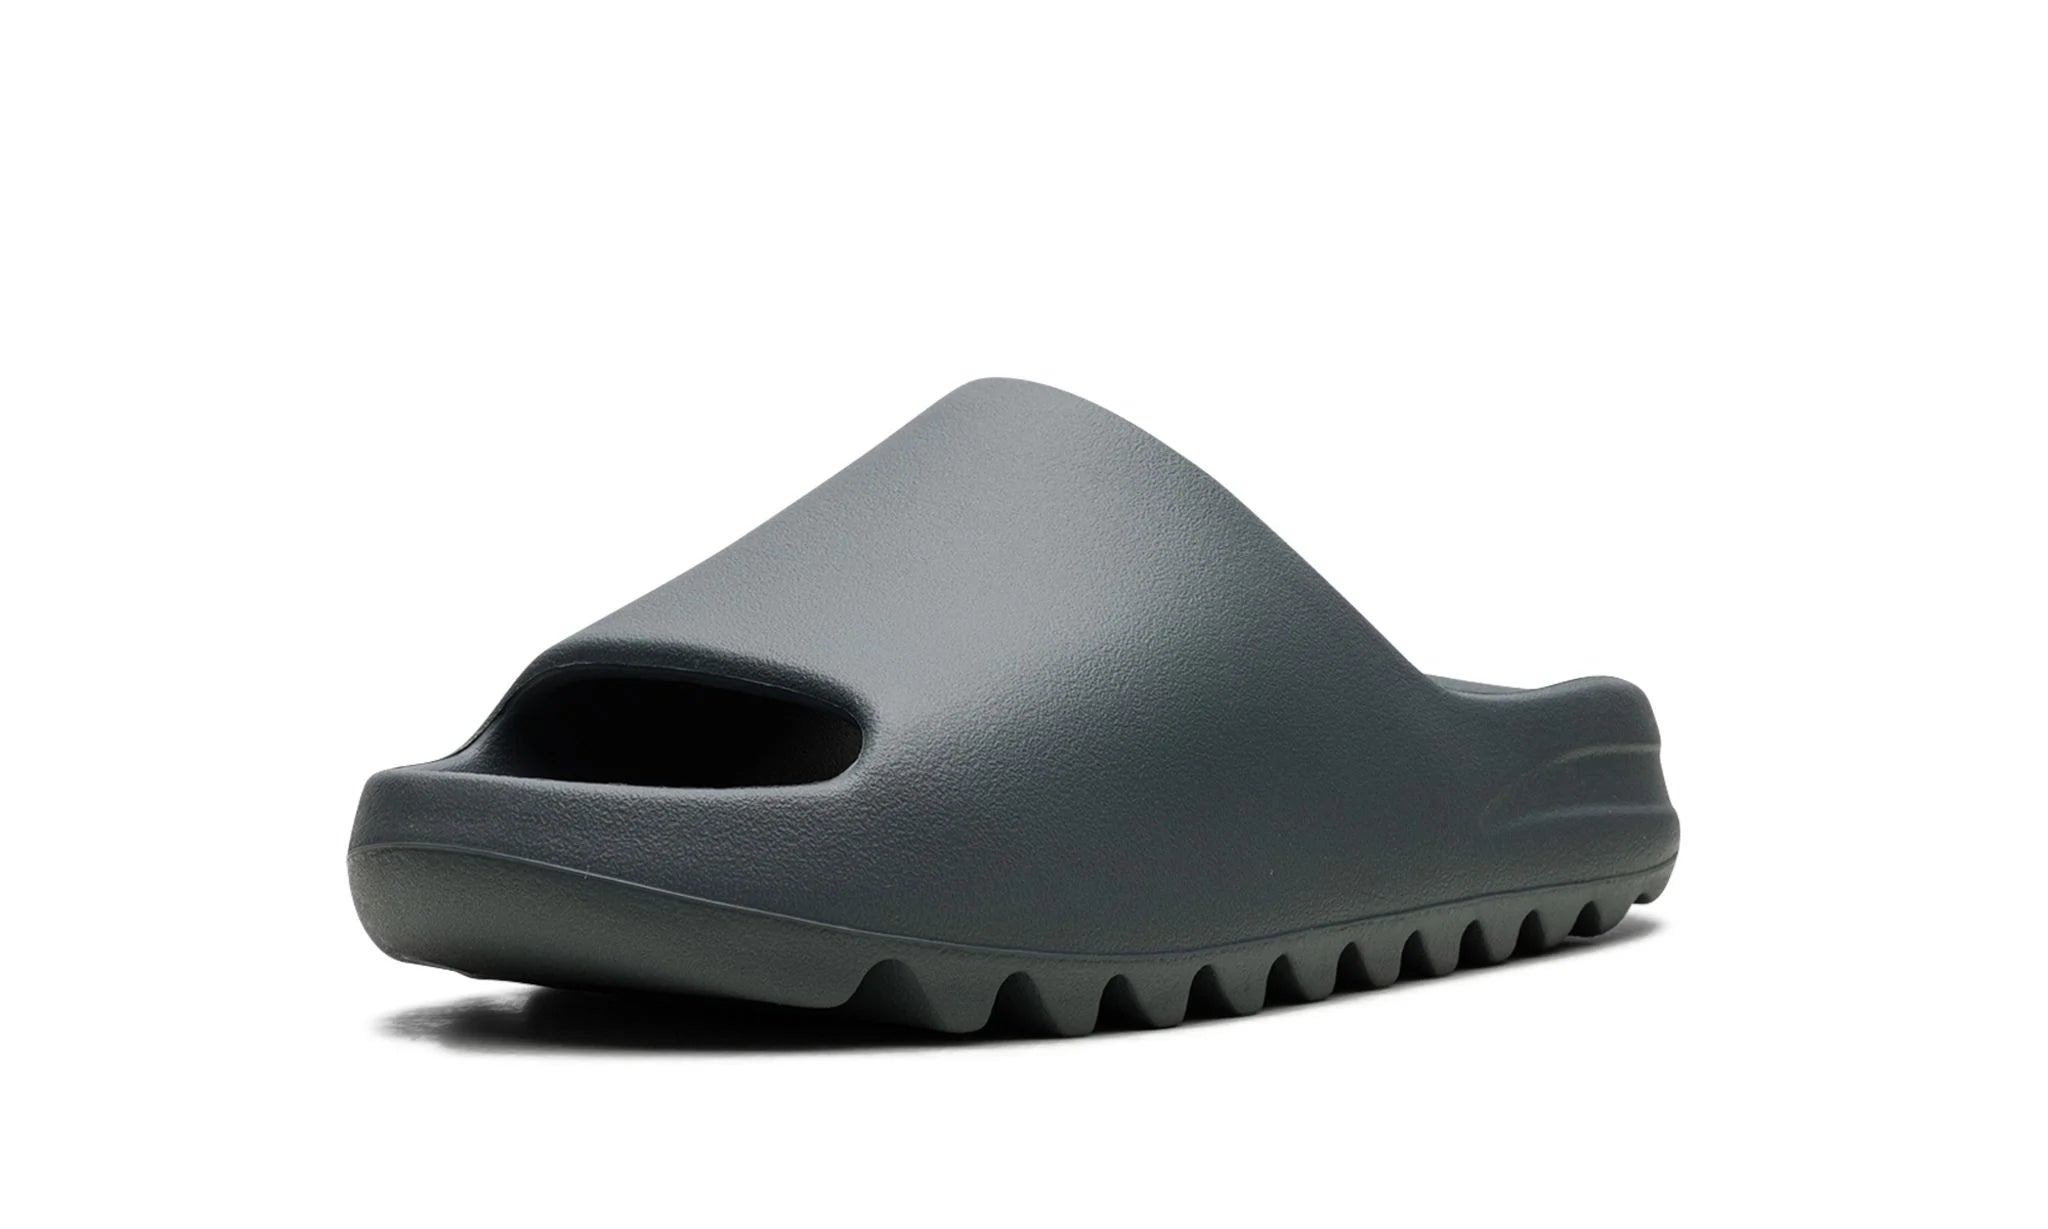 Adidas Yeezy Slide Slate Marine - Yeezy Slide - Pirri